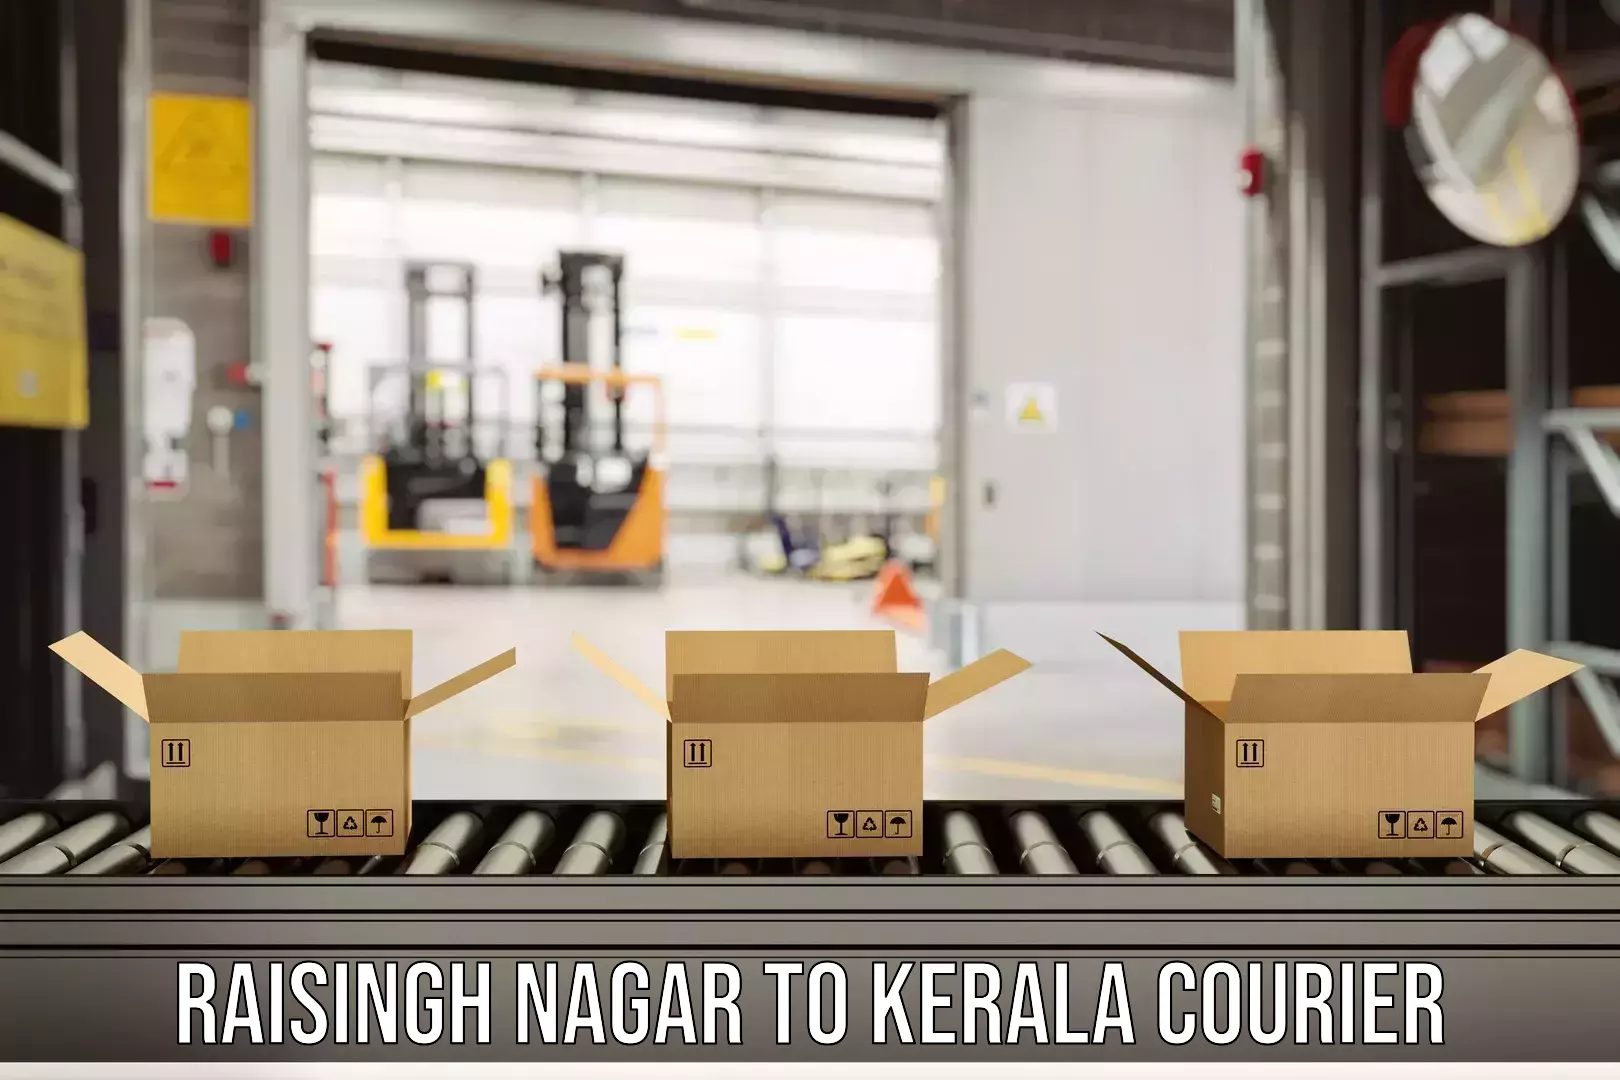 Express delivery network Raisingh Nagar to Kerala